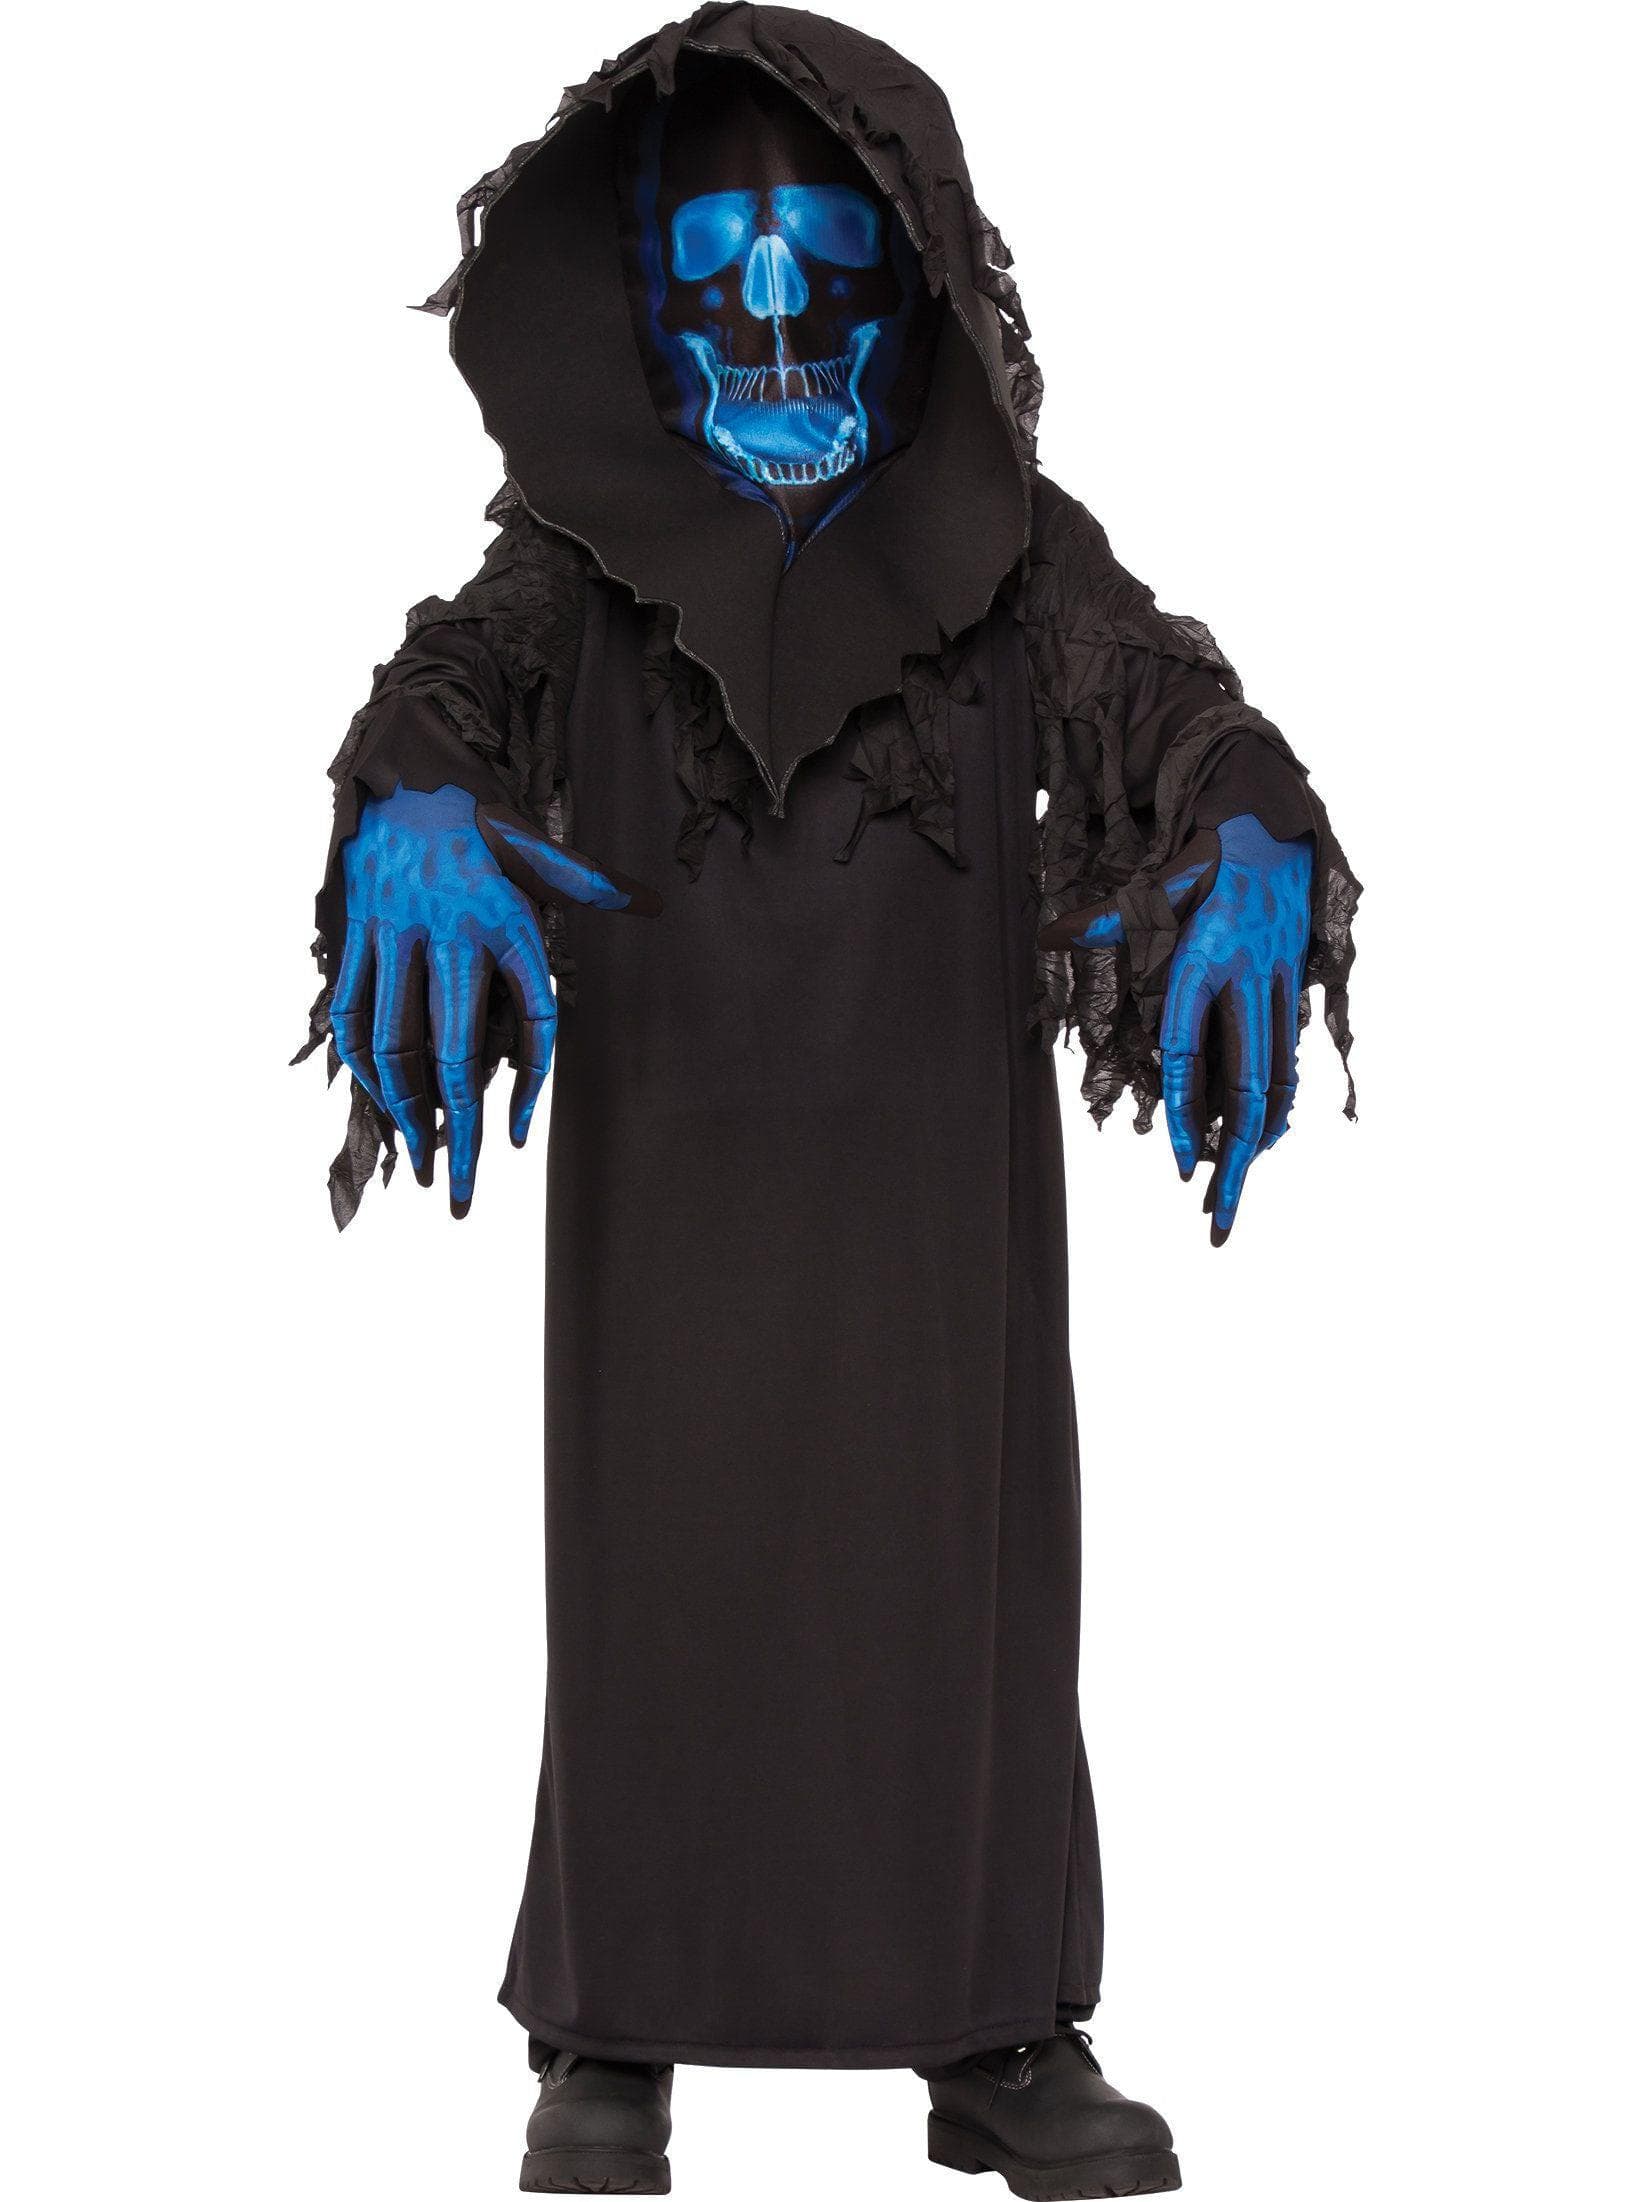 Kids Skull Phantom Costume - costumes.com